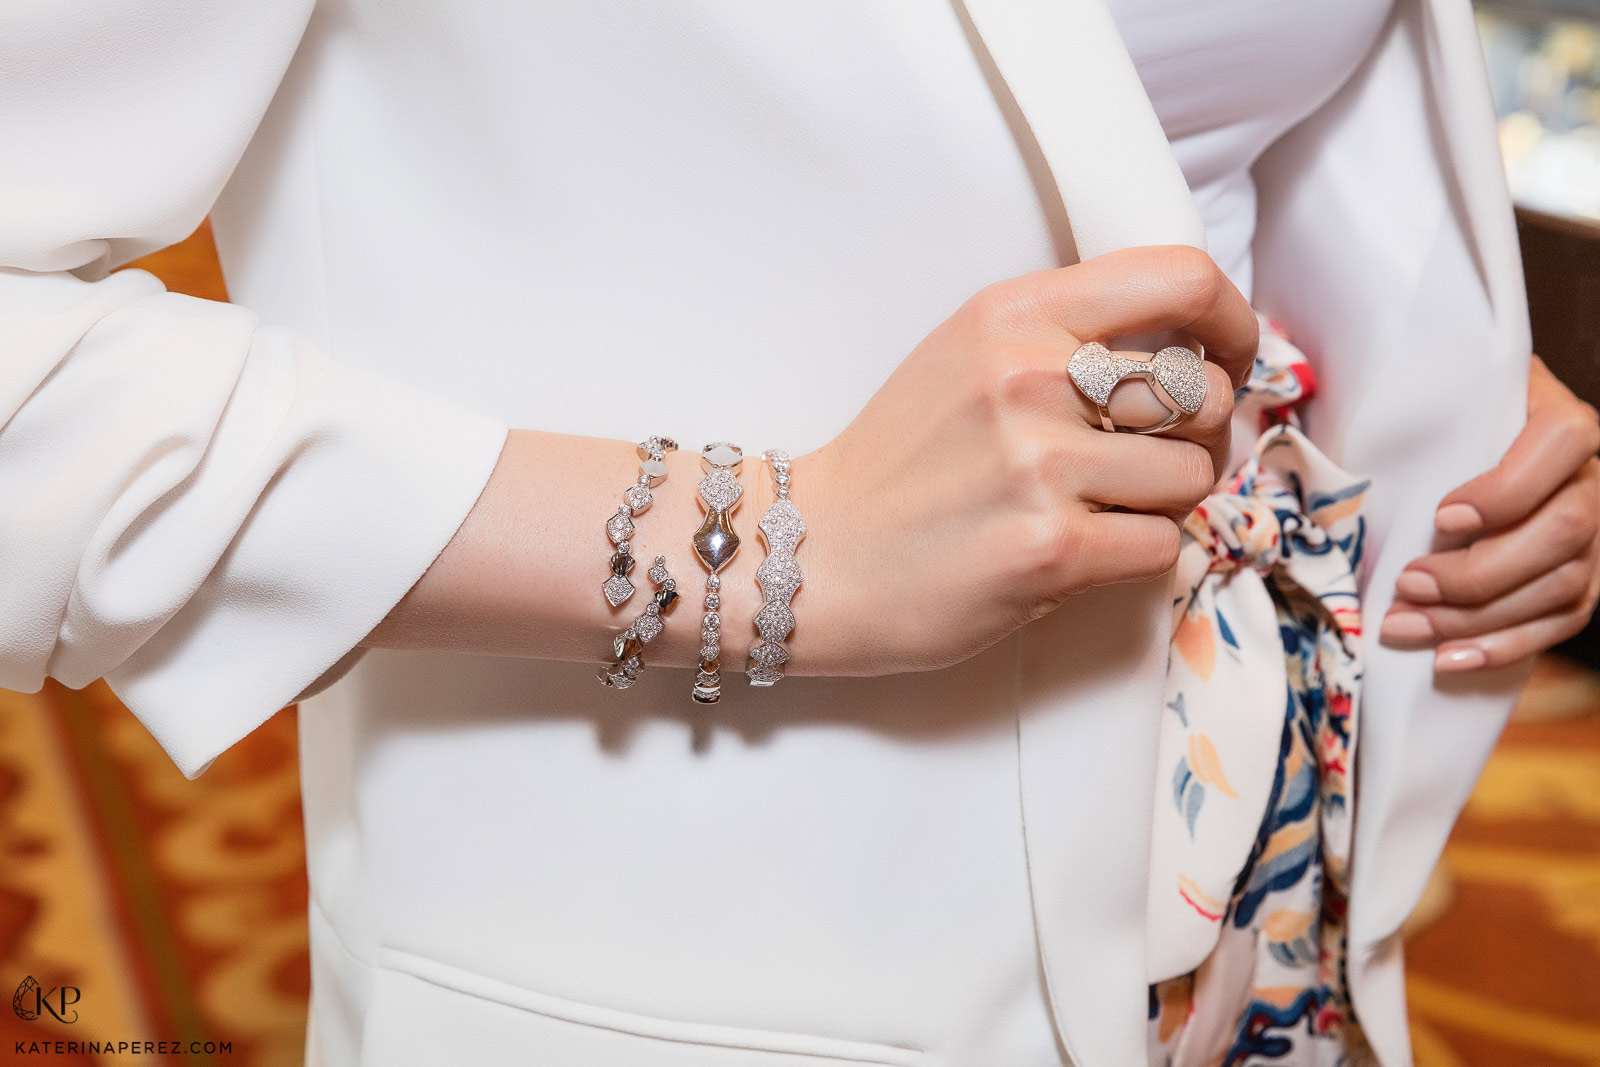 Akillis Python bracelets and ring paved with diamonds. Photo by Simon Martner